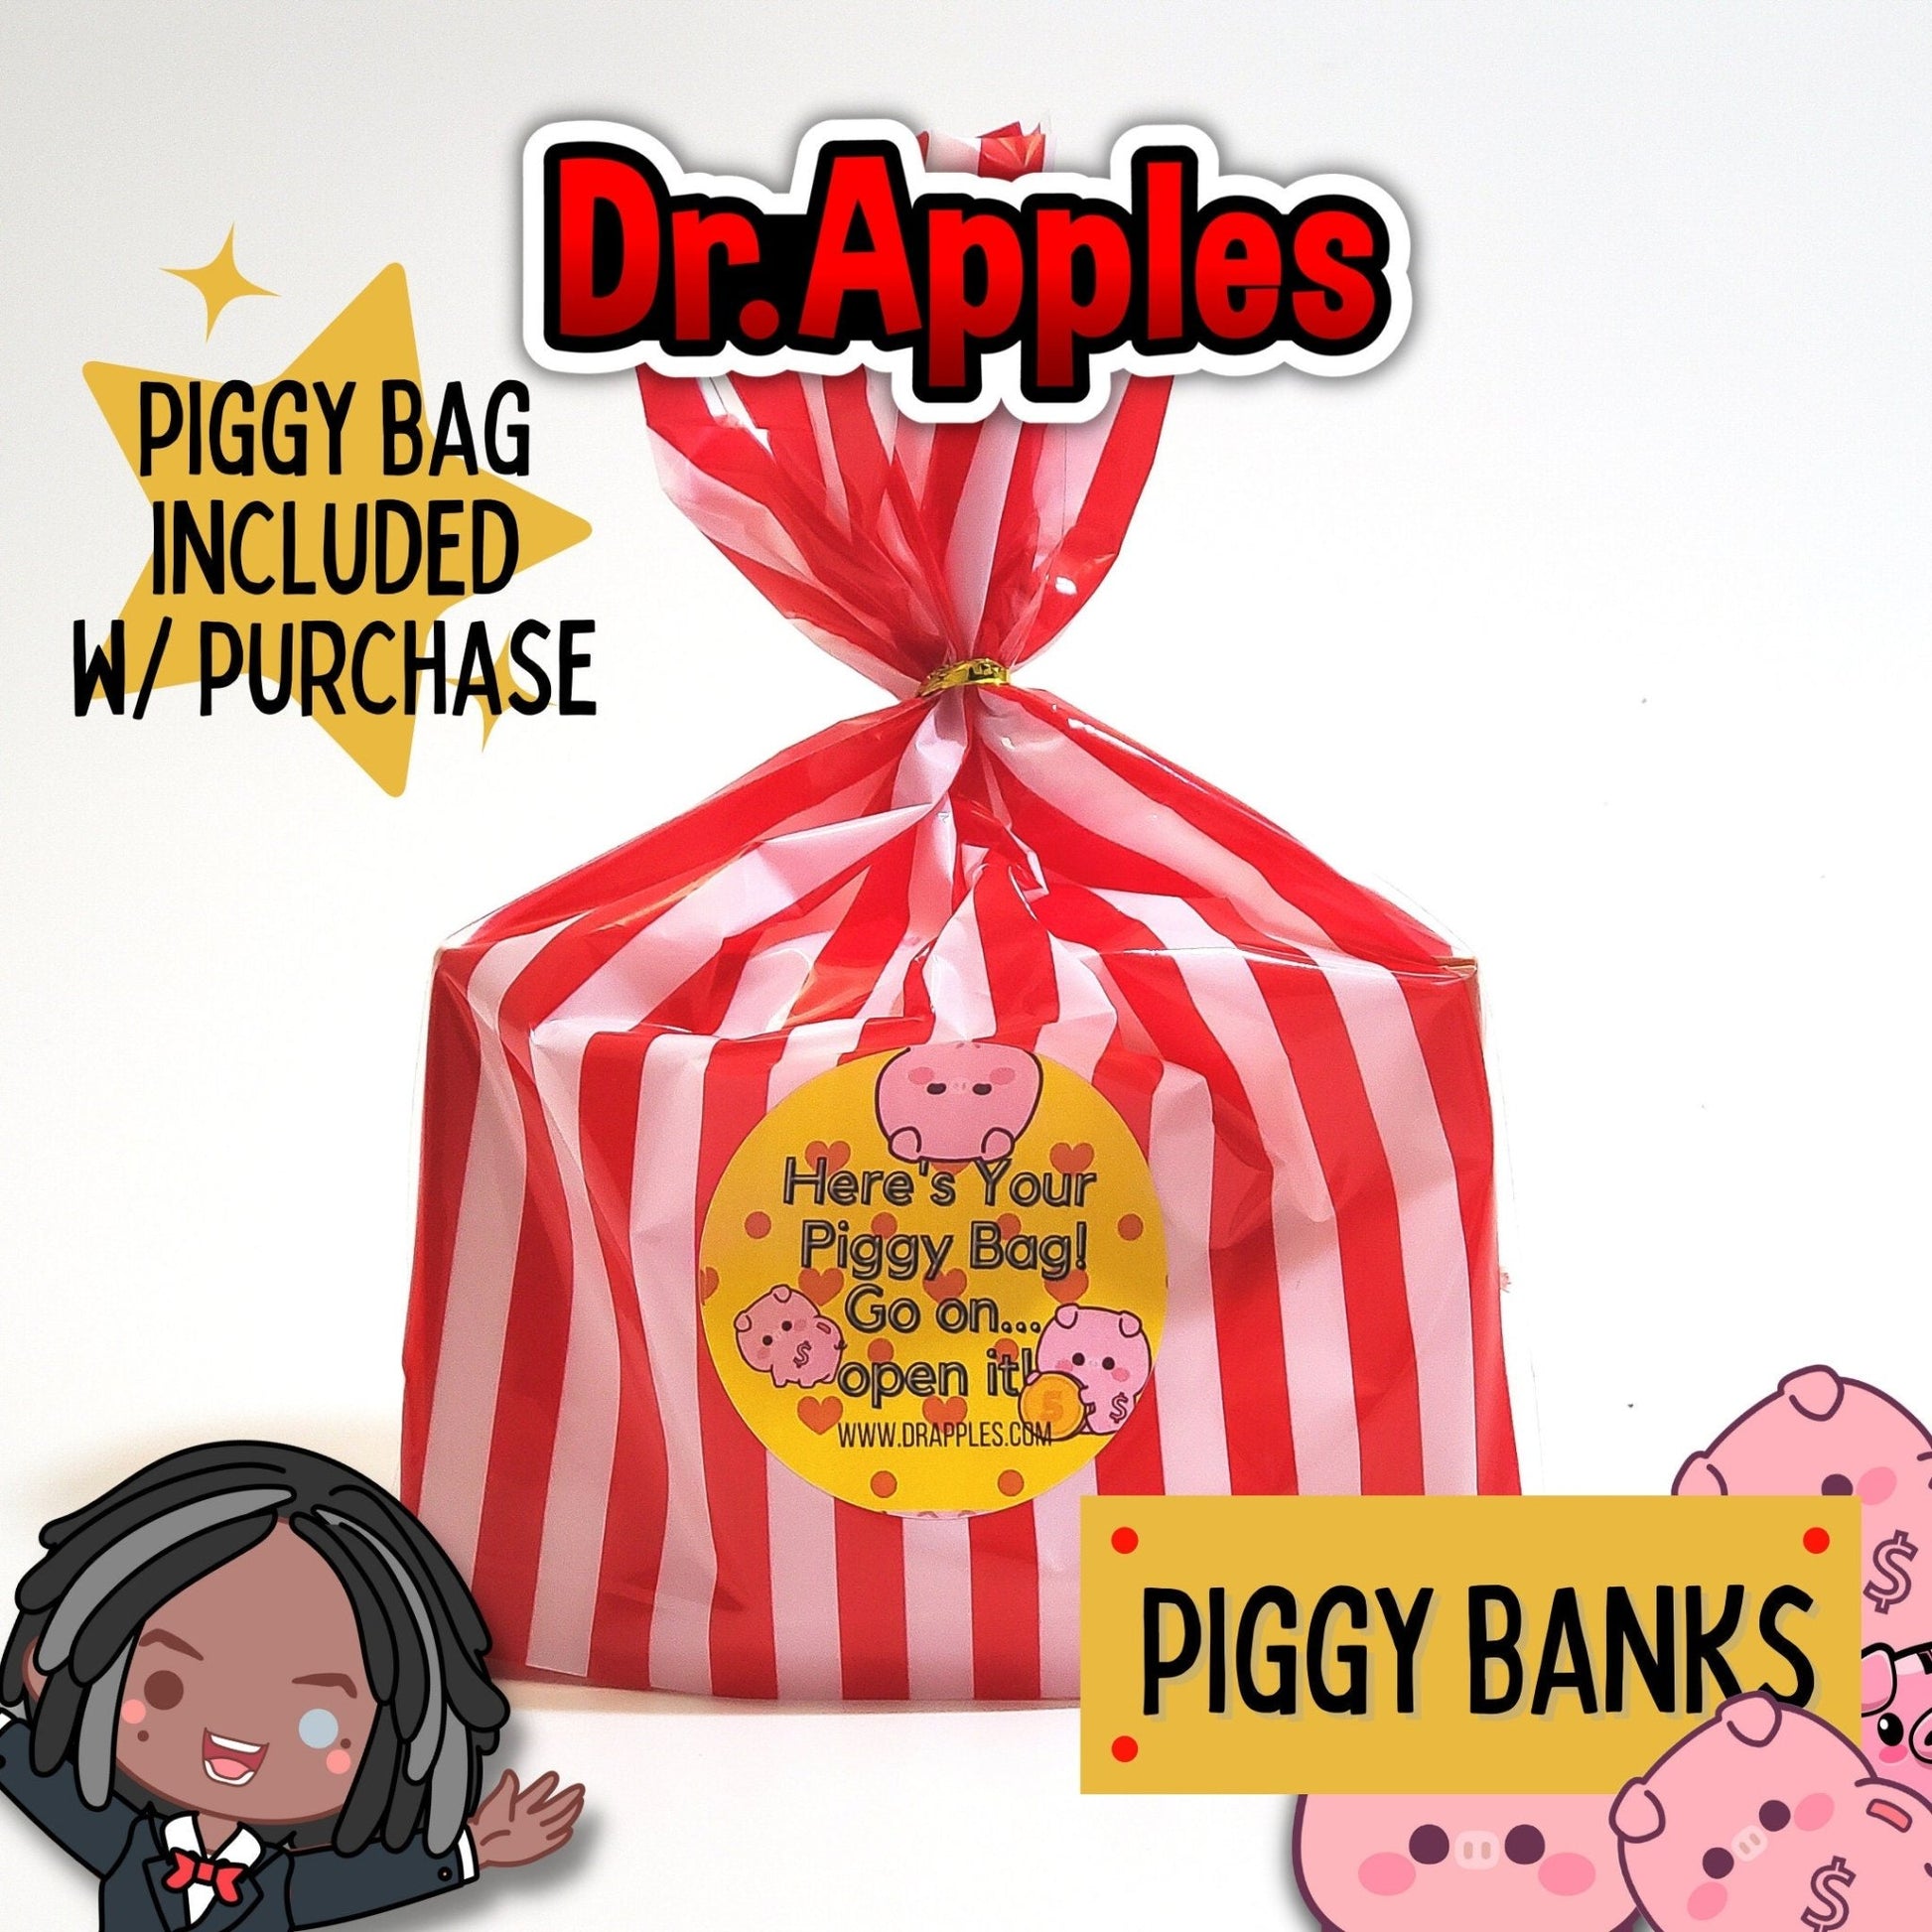 Piggy Bank | Pistachio | Gift - Dr. Apples - Lacye A Brown